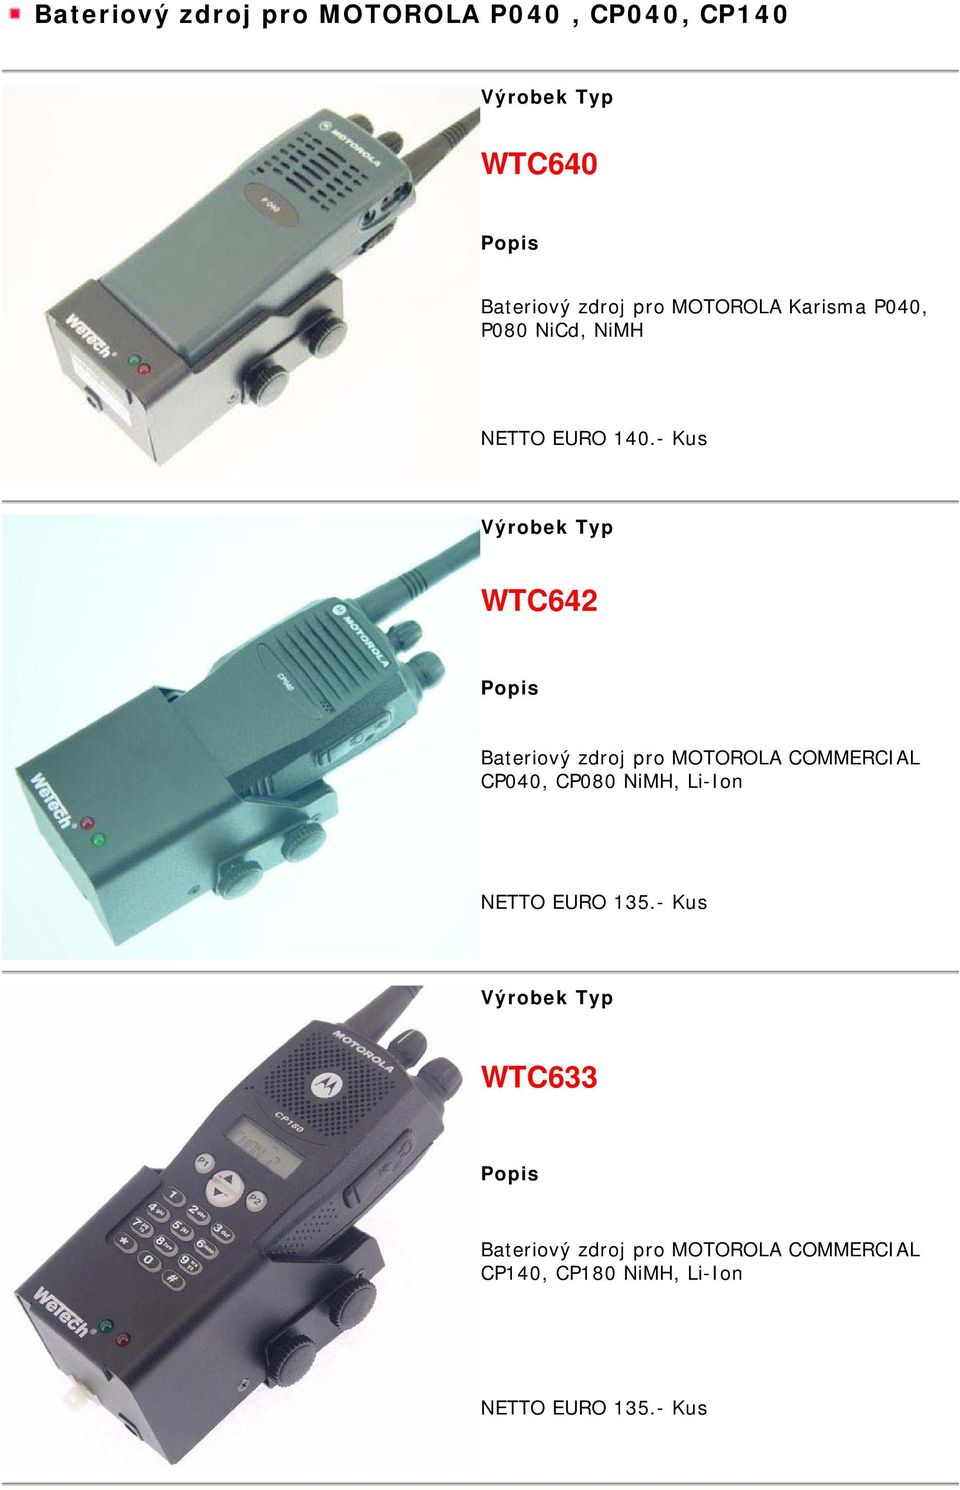 - Kus WTC642 Bateriový zdroj pro MOTOROLA COMMERCIAL CP040, CP080 NiMH, Li-Ion